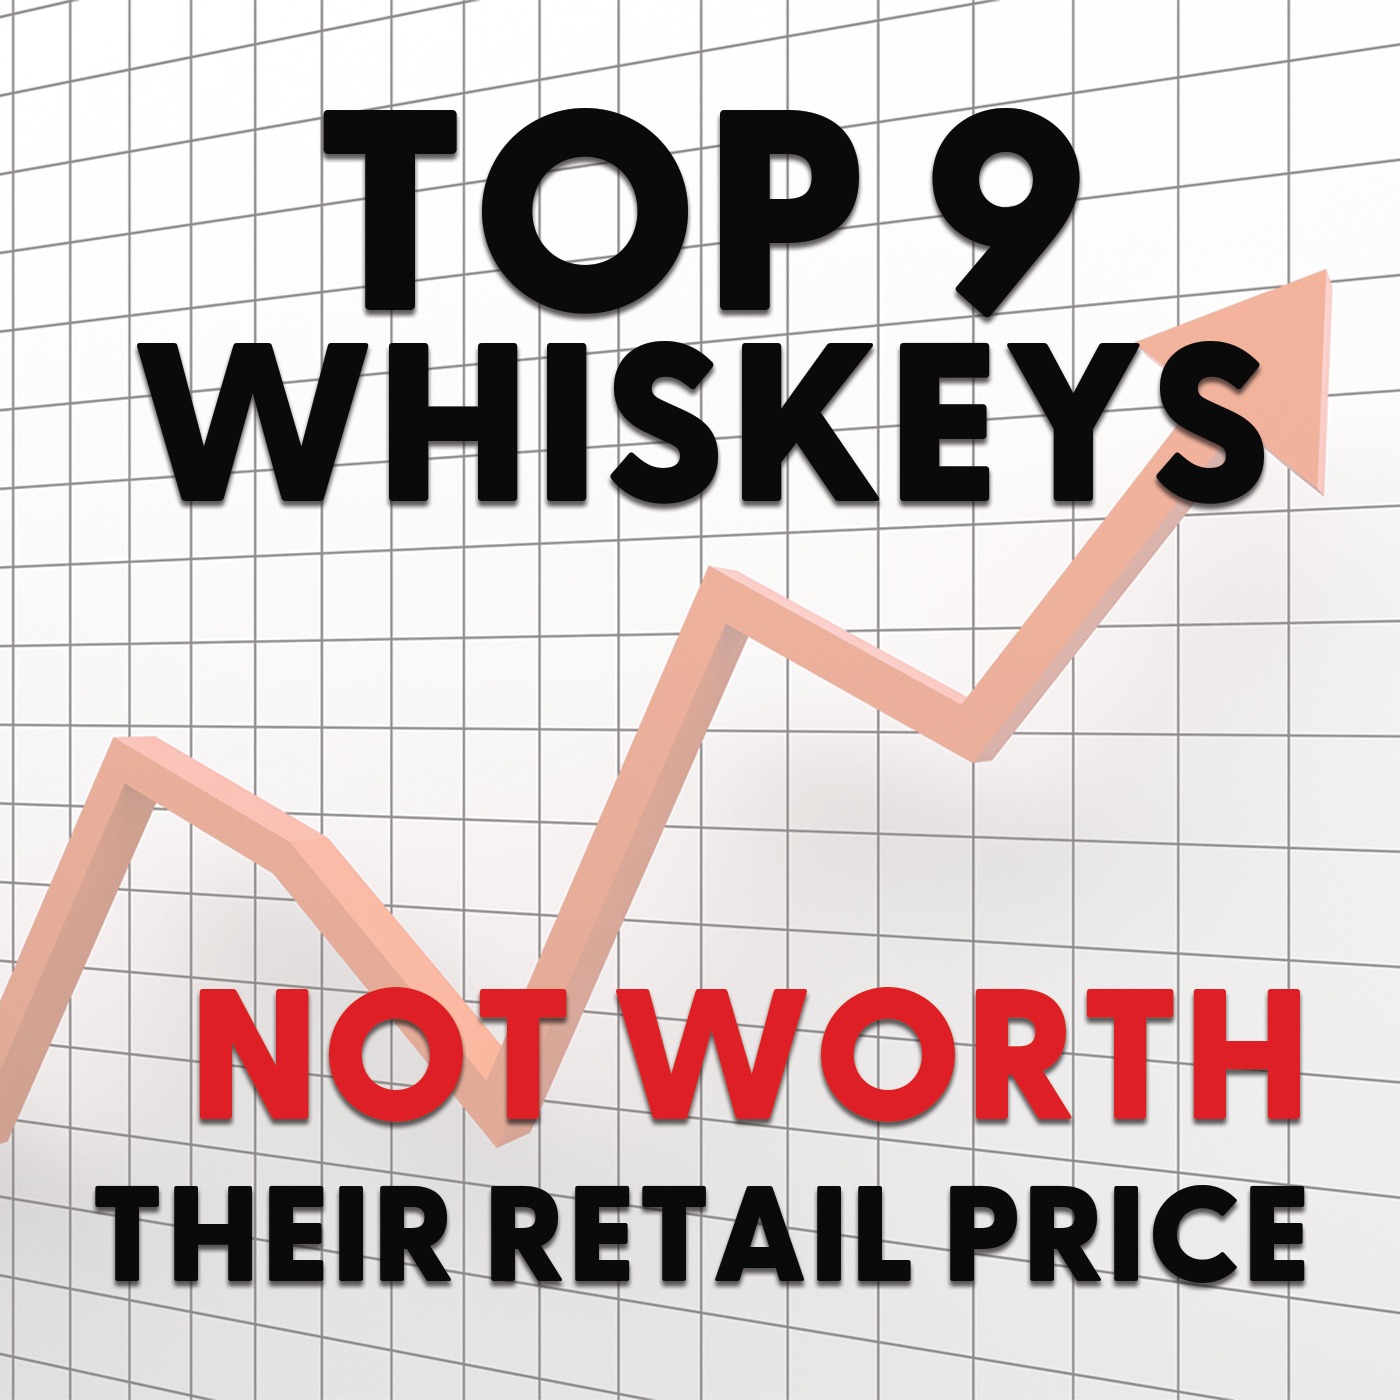 9 Whiskeys Not Worth Their Retail Price